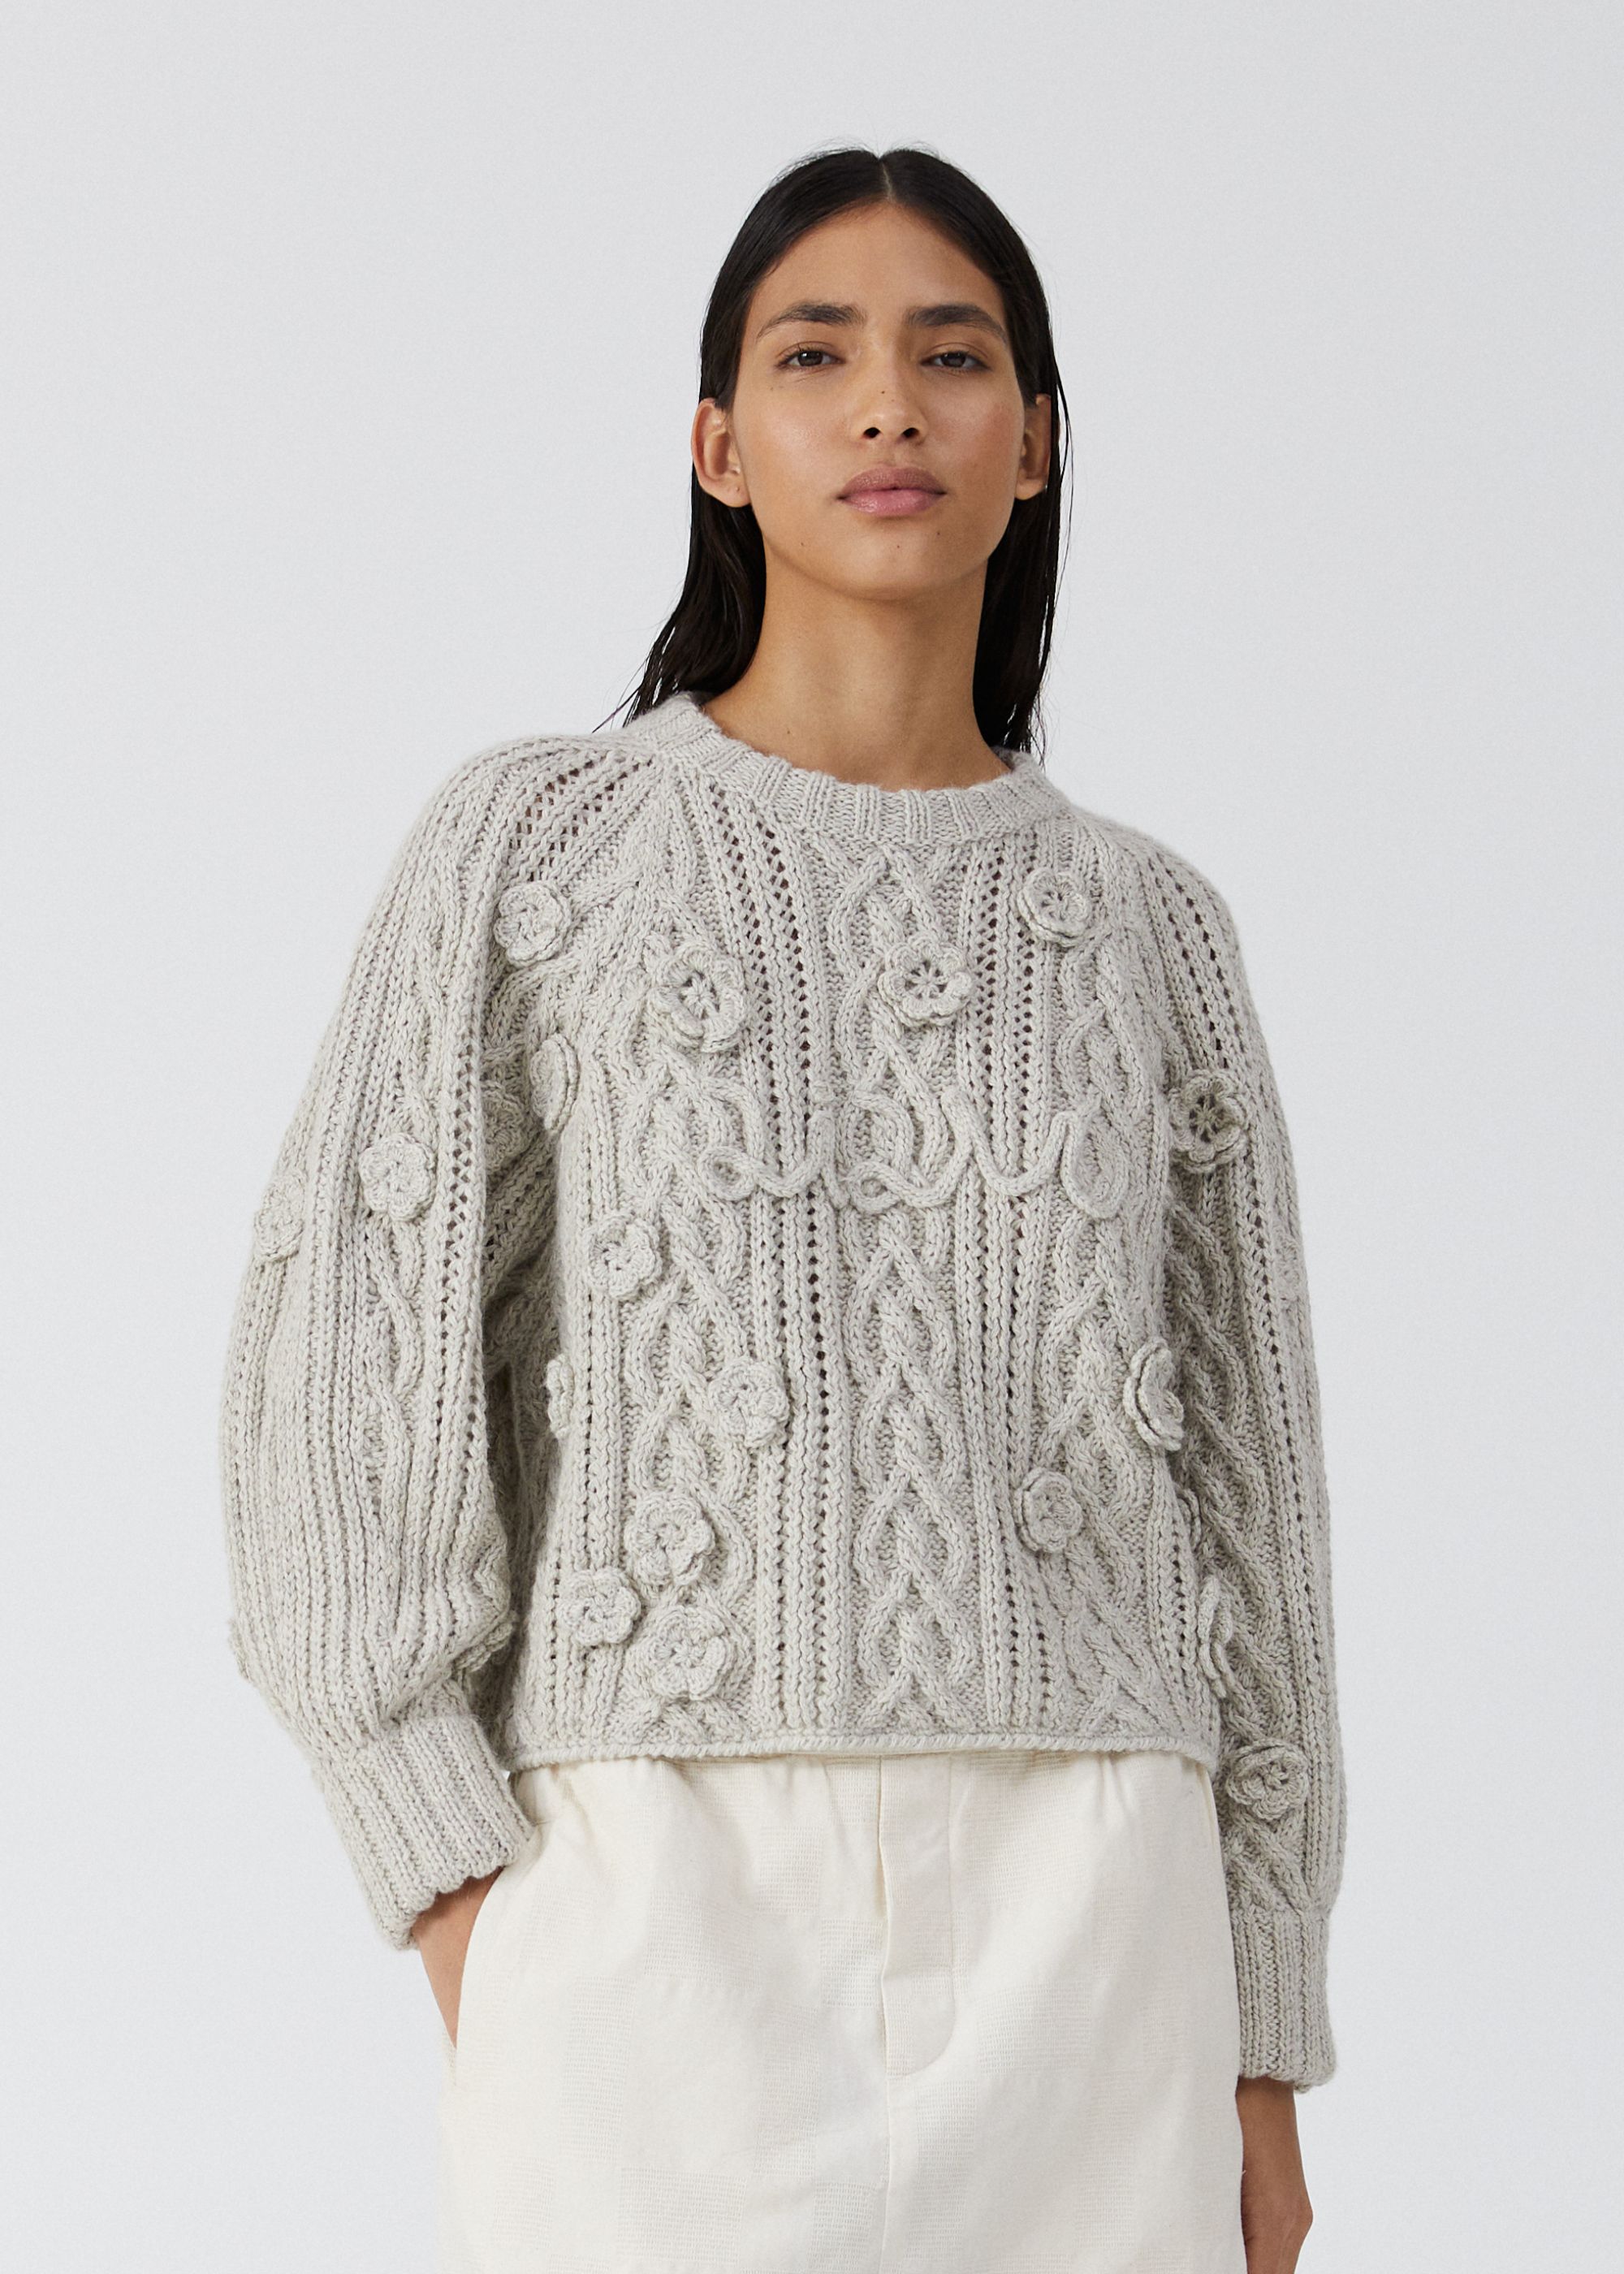 Strickwaren - Tonja handknitted sweater